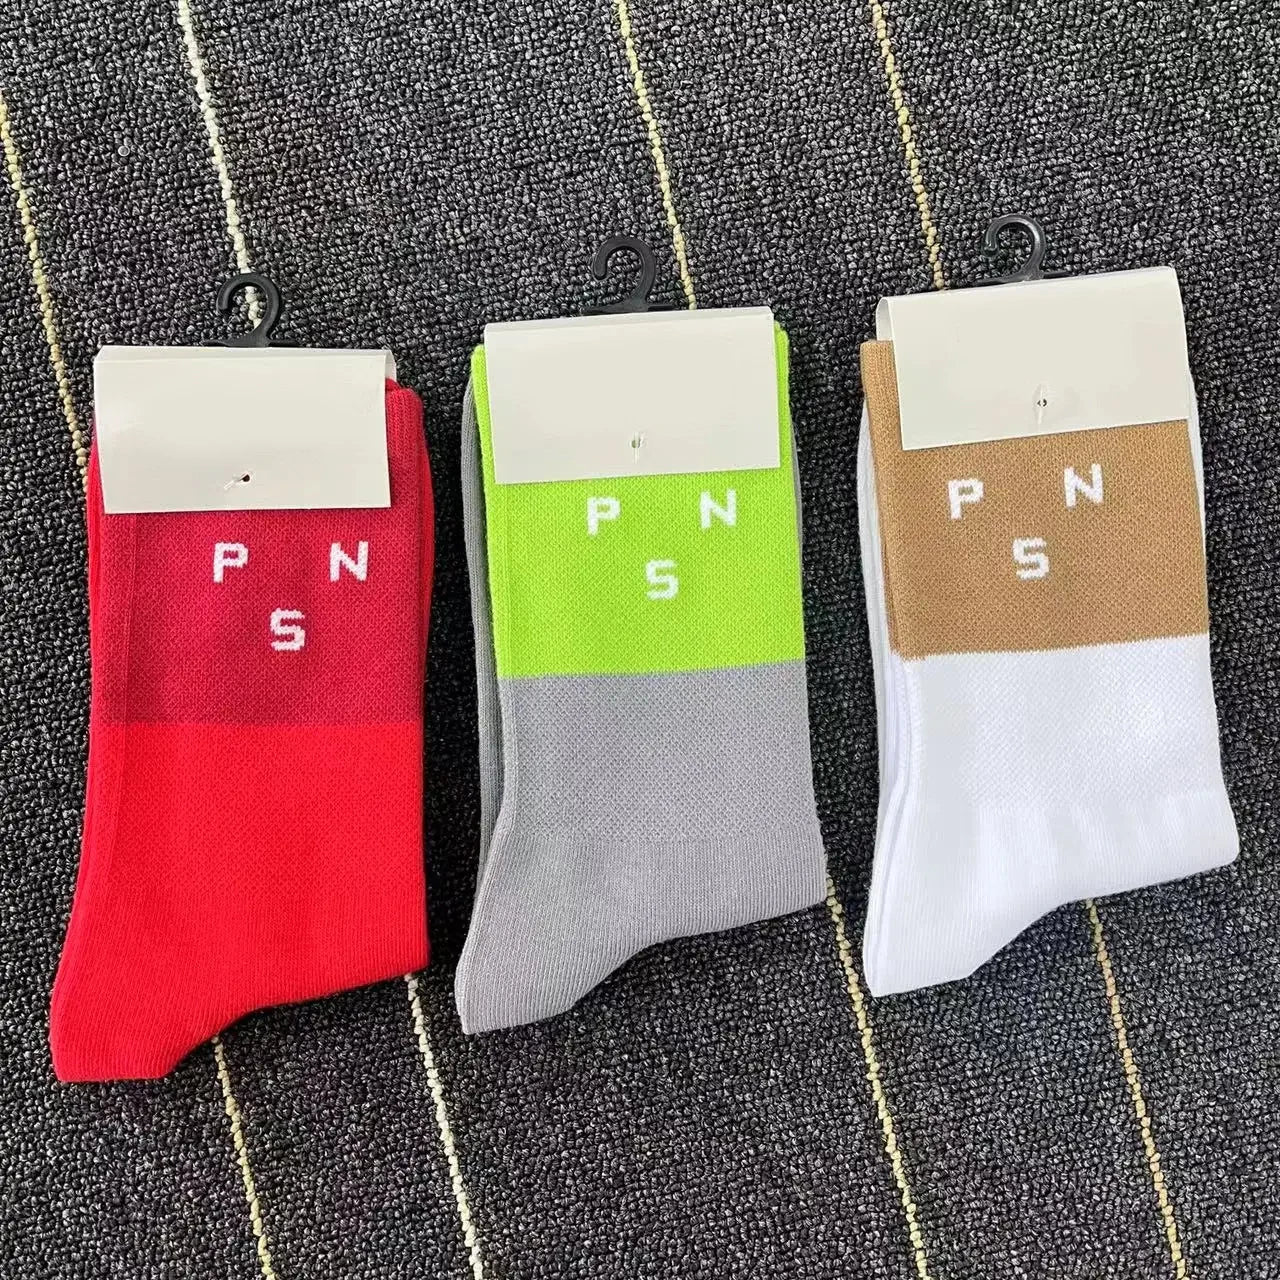 Breathable Outdoor Sports Socks for Men